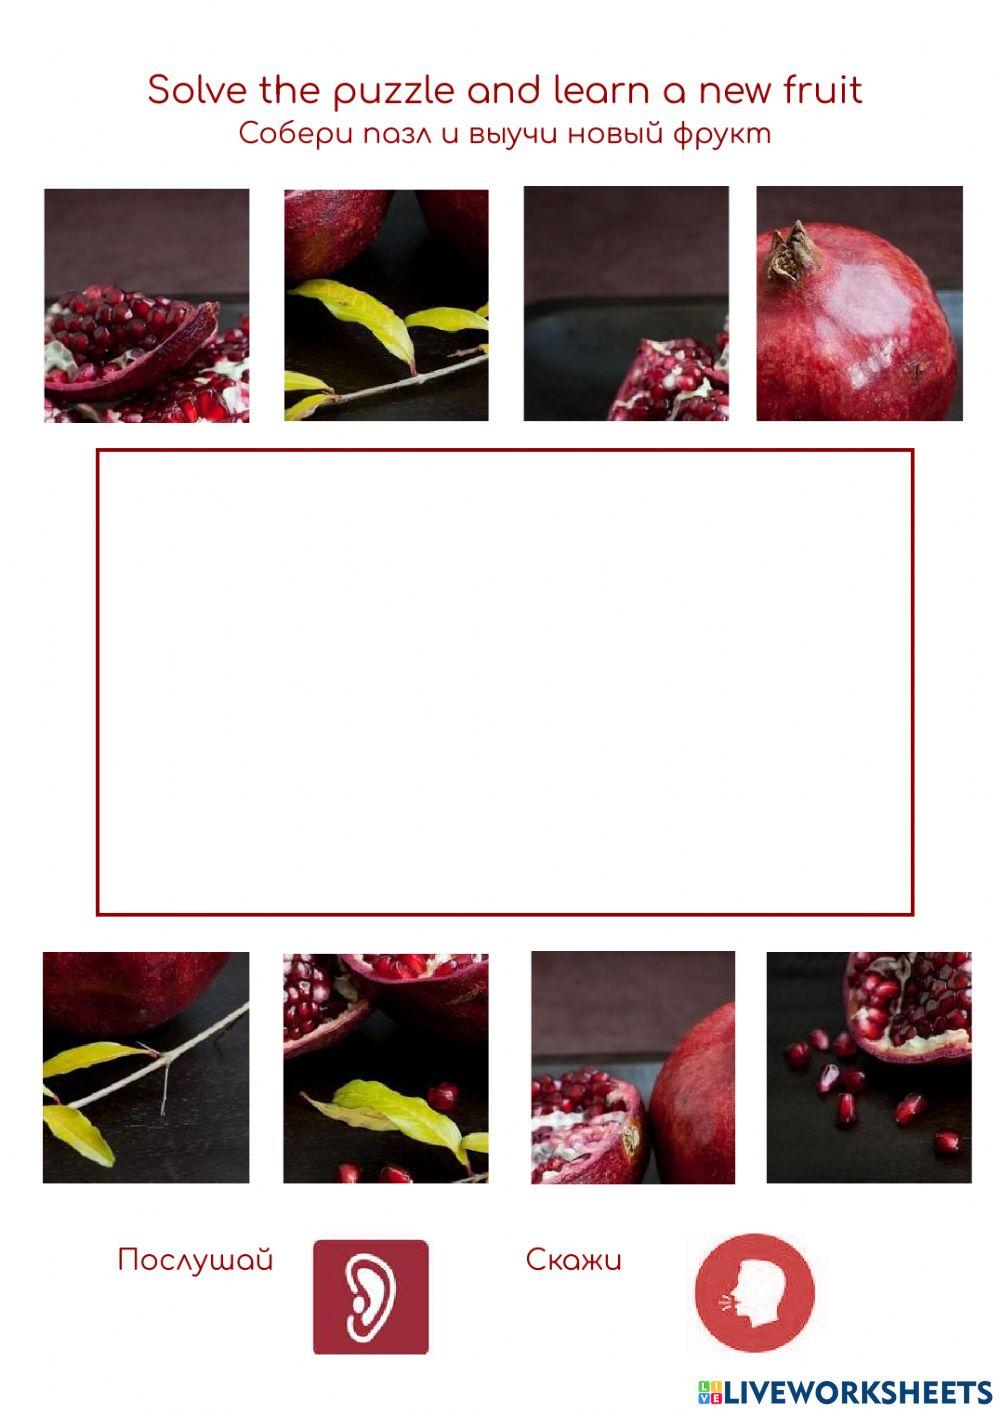 Fruit: pomegranate